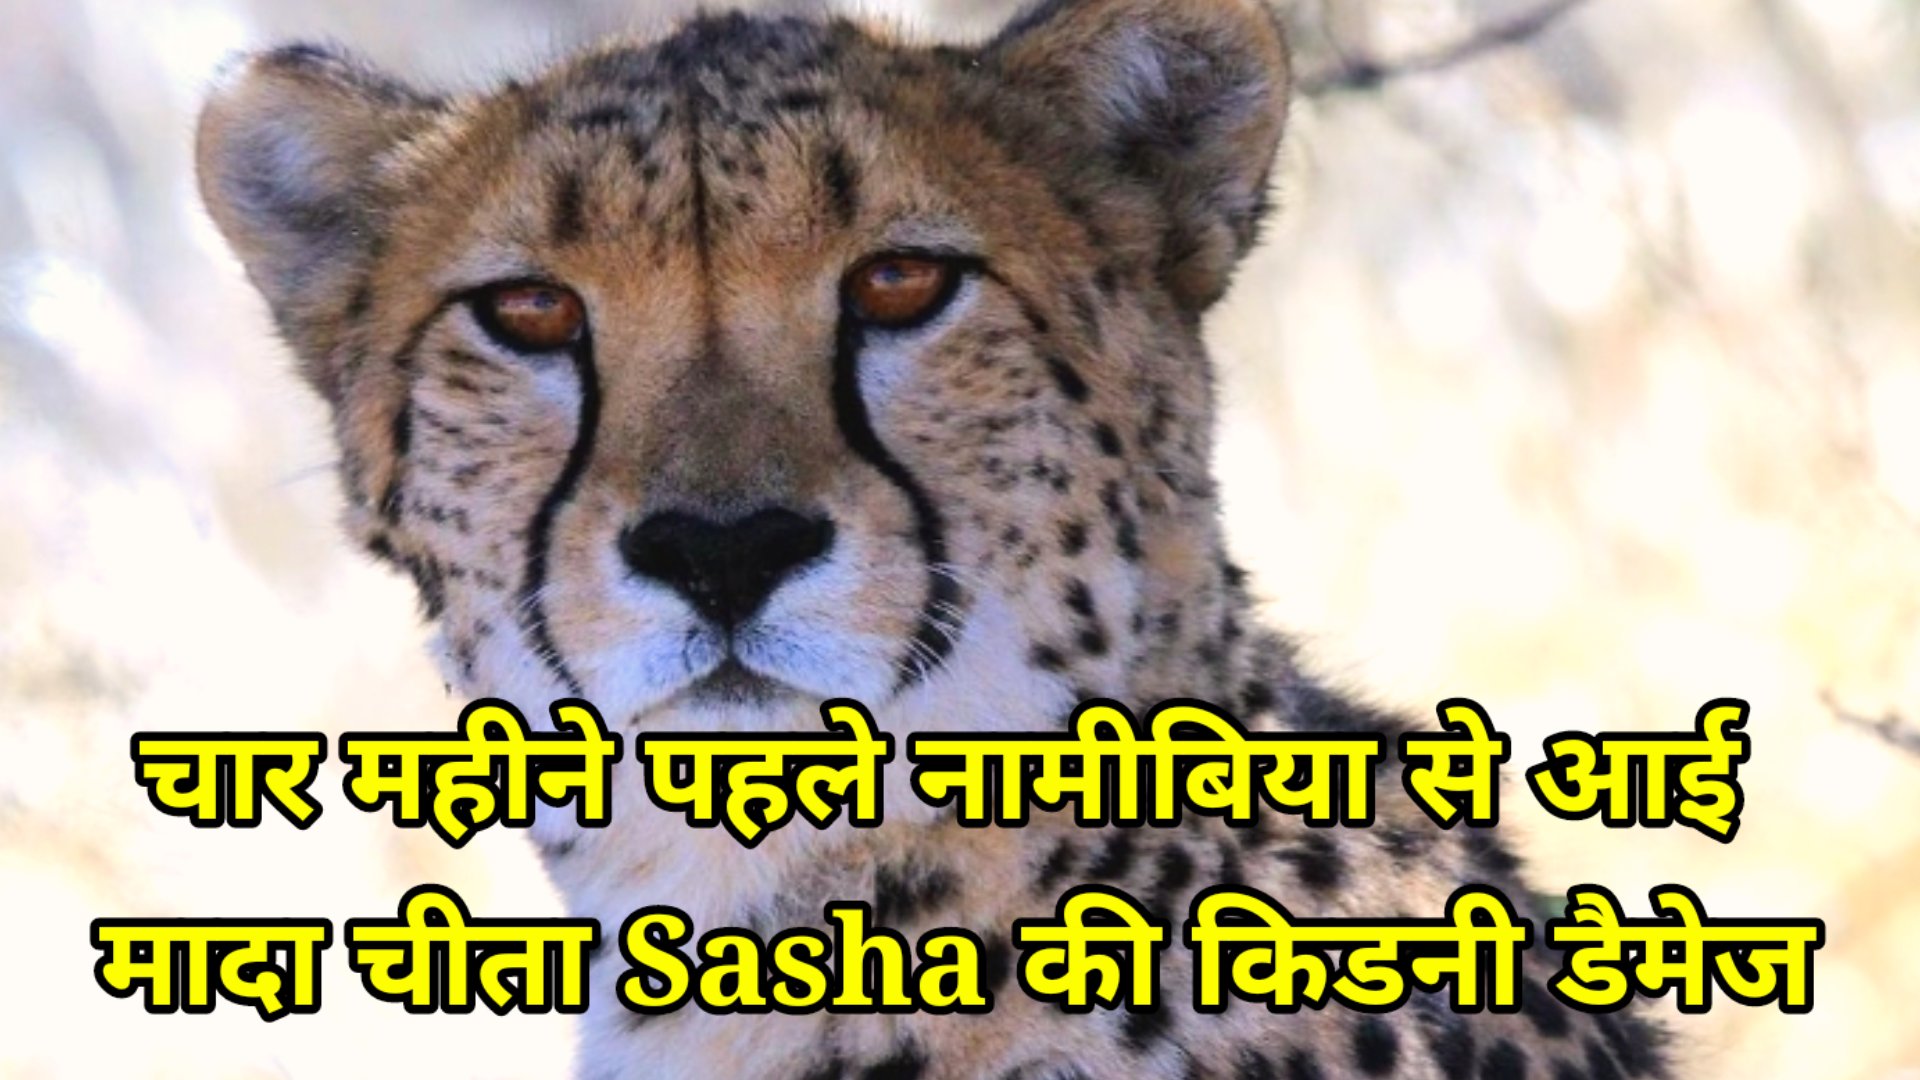 Kuno national park bad news, female tiger Sasha suffering from kidney damage:चार महीने पहले नामीबिया से आई मादा चीता Sasha की किडनी डैमेज